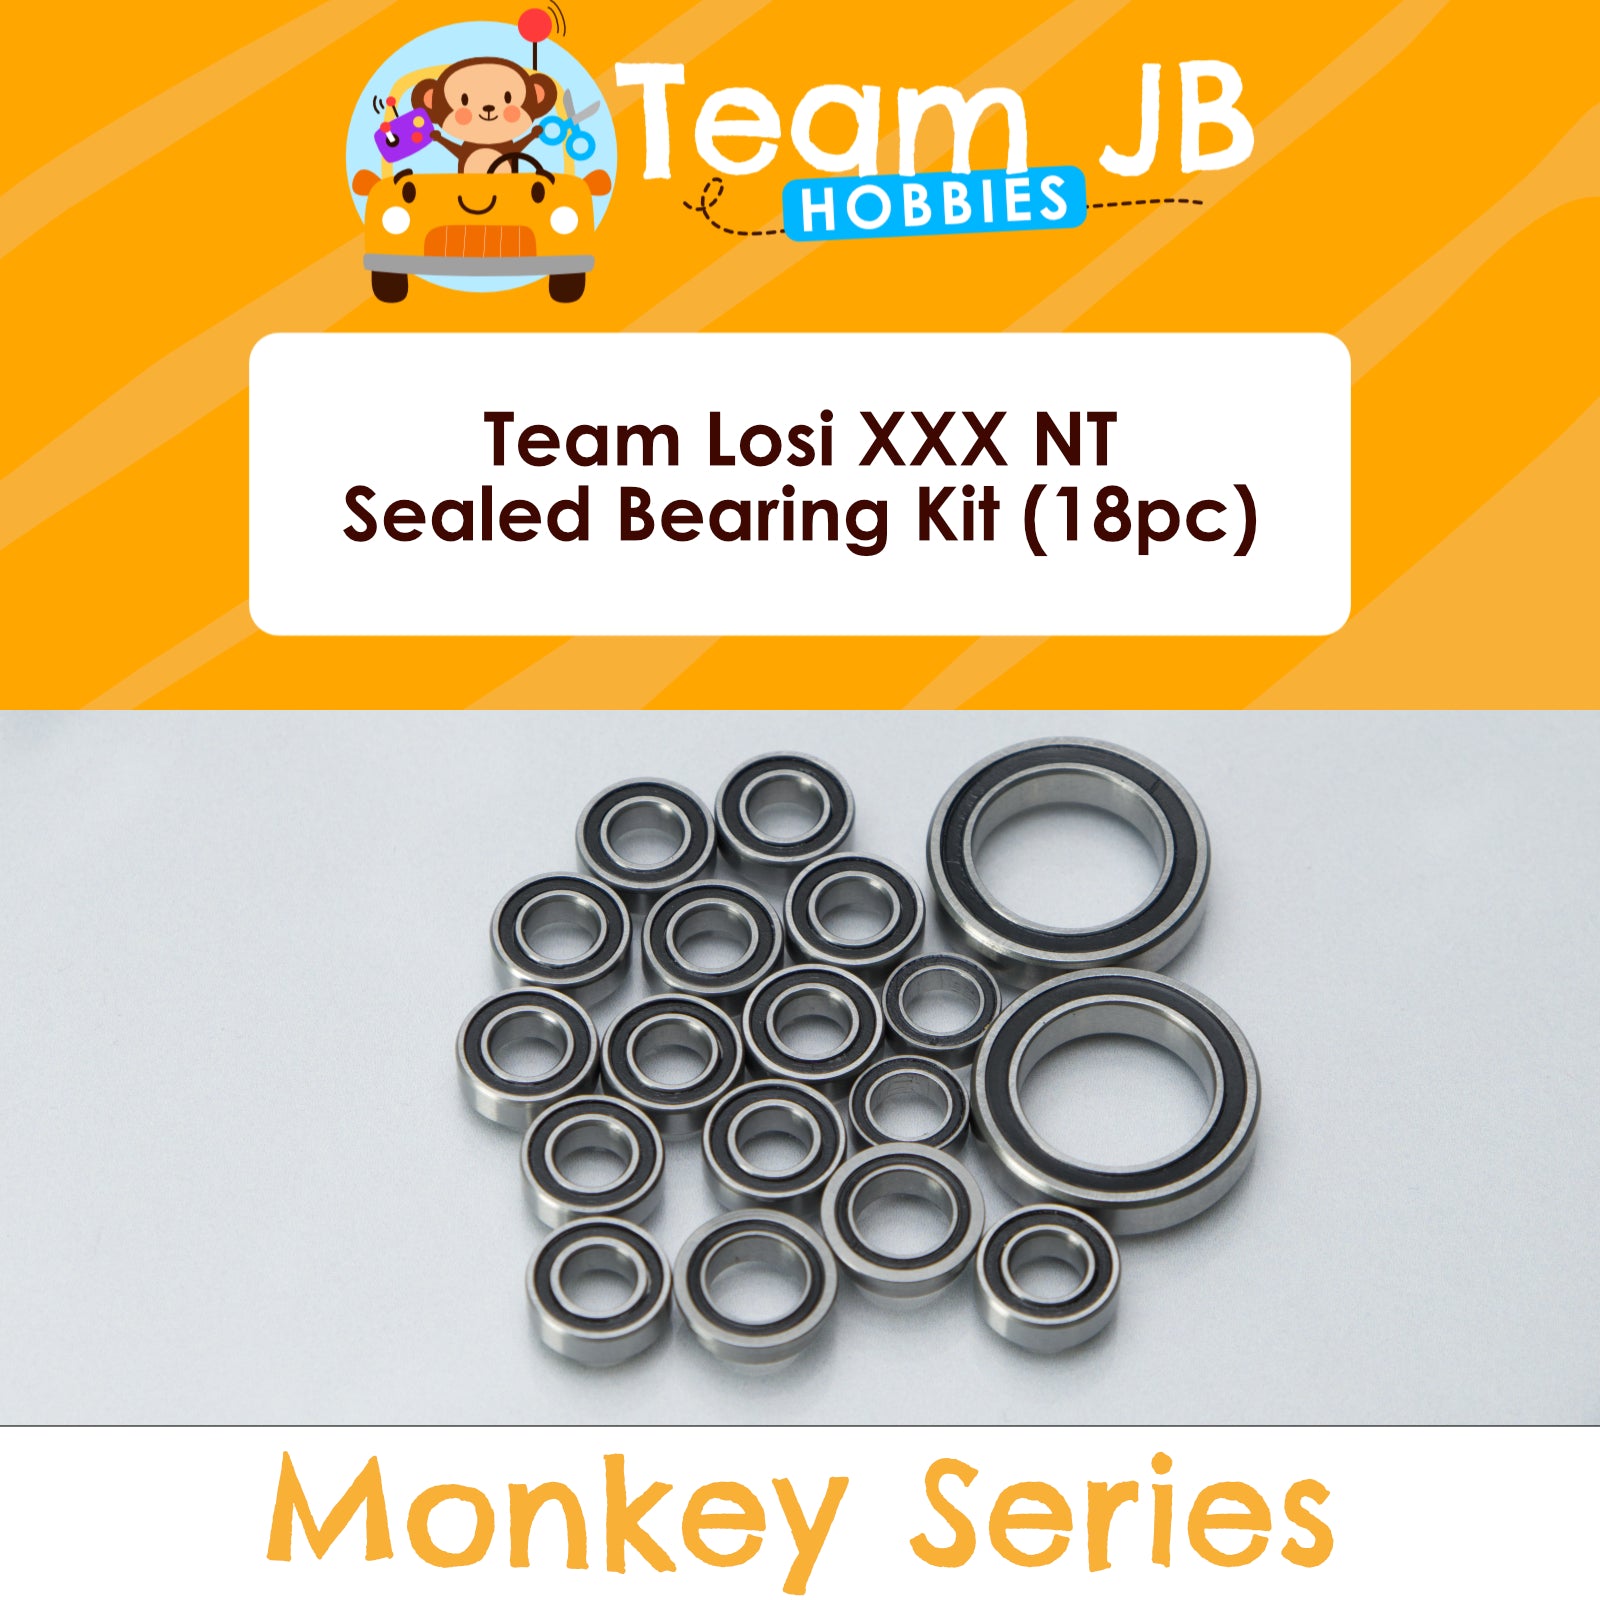 Team Losi XXX NT - Sealed Bearing Kit